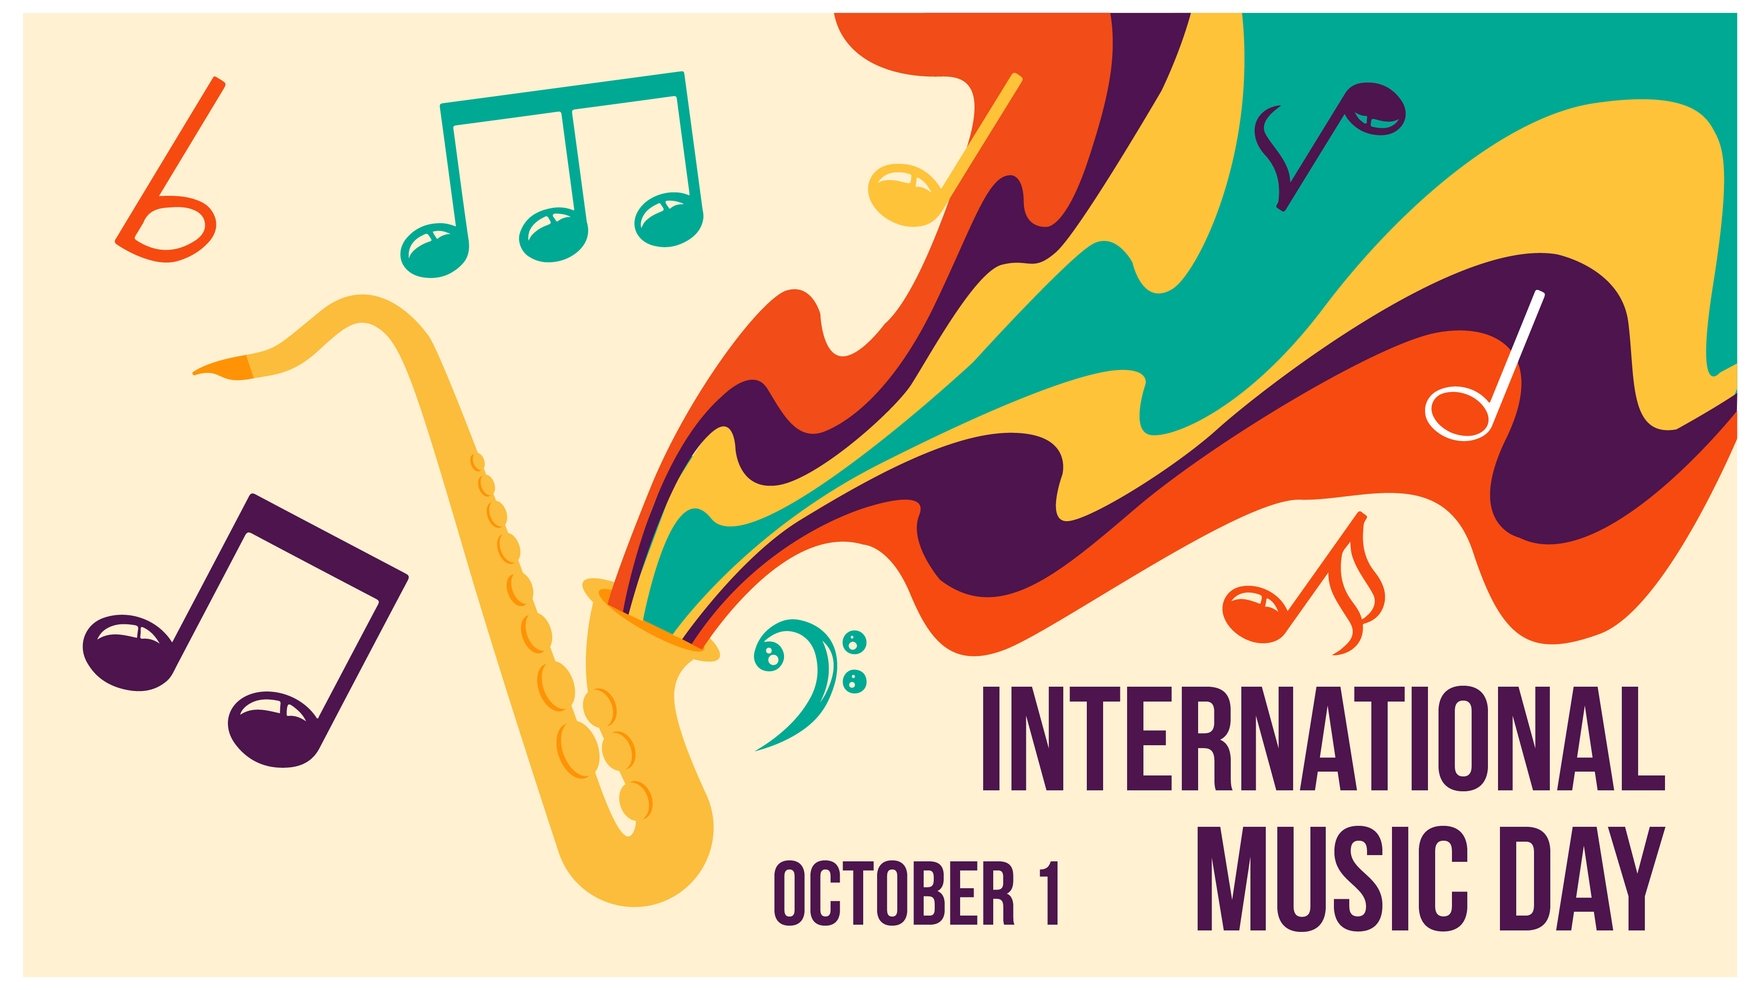 International Music Day Image Background in Illustrator, PDF, PSD, SVG